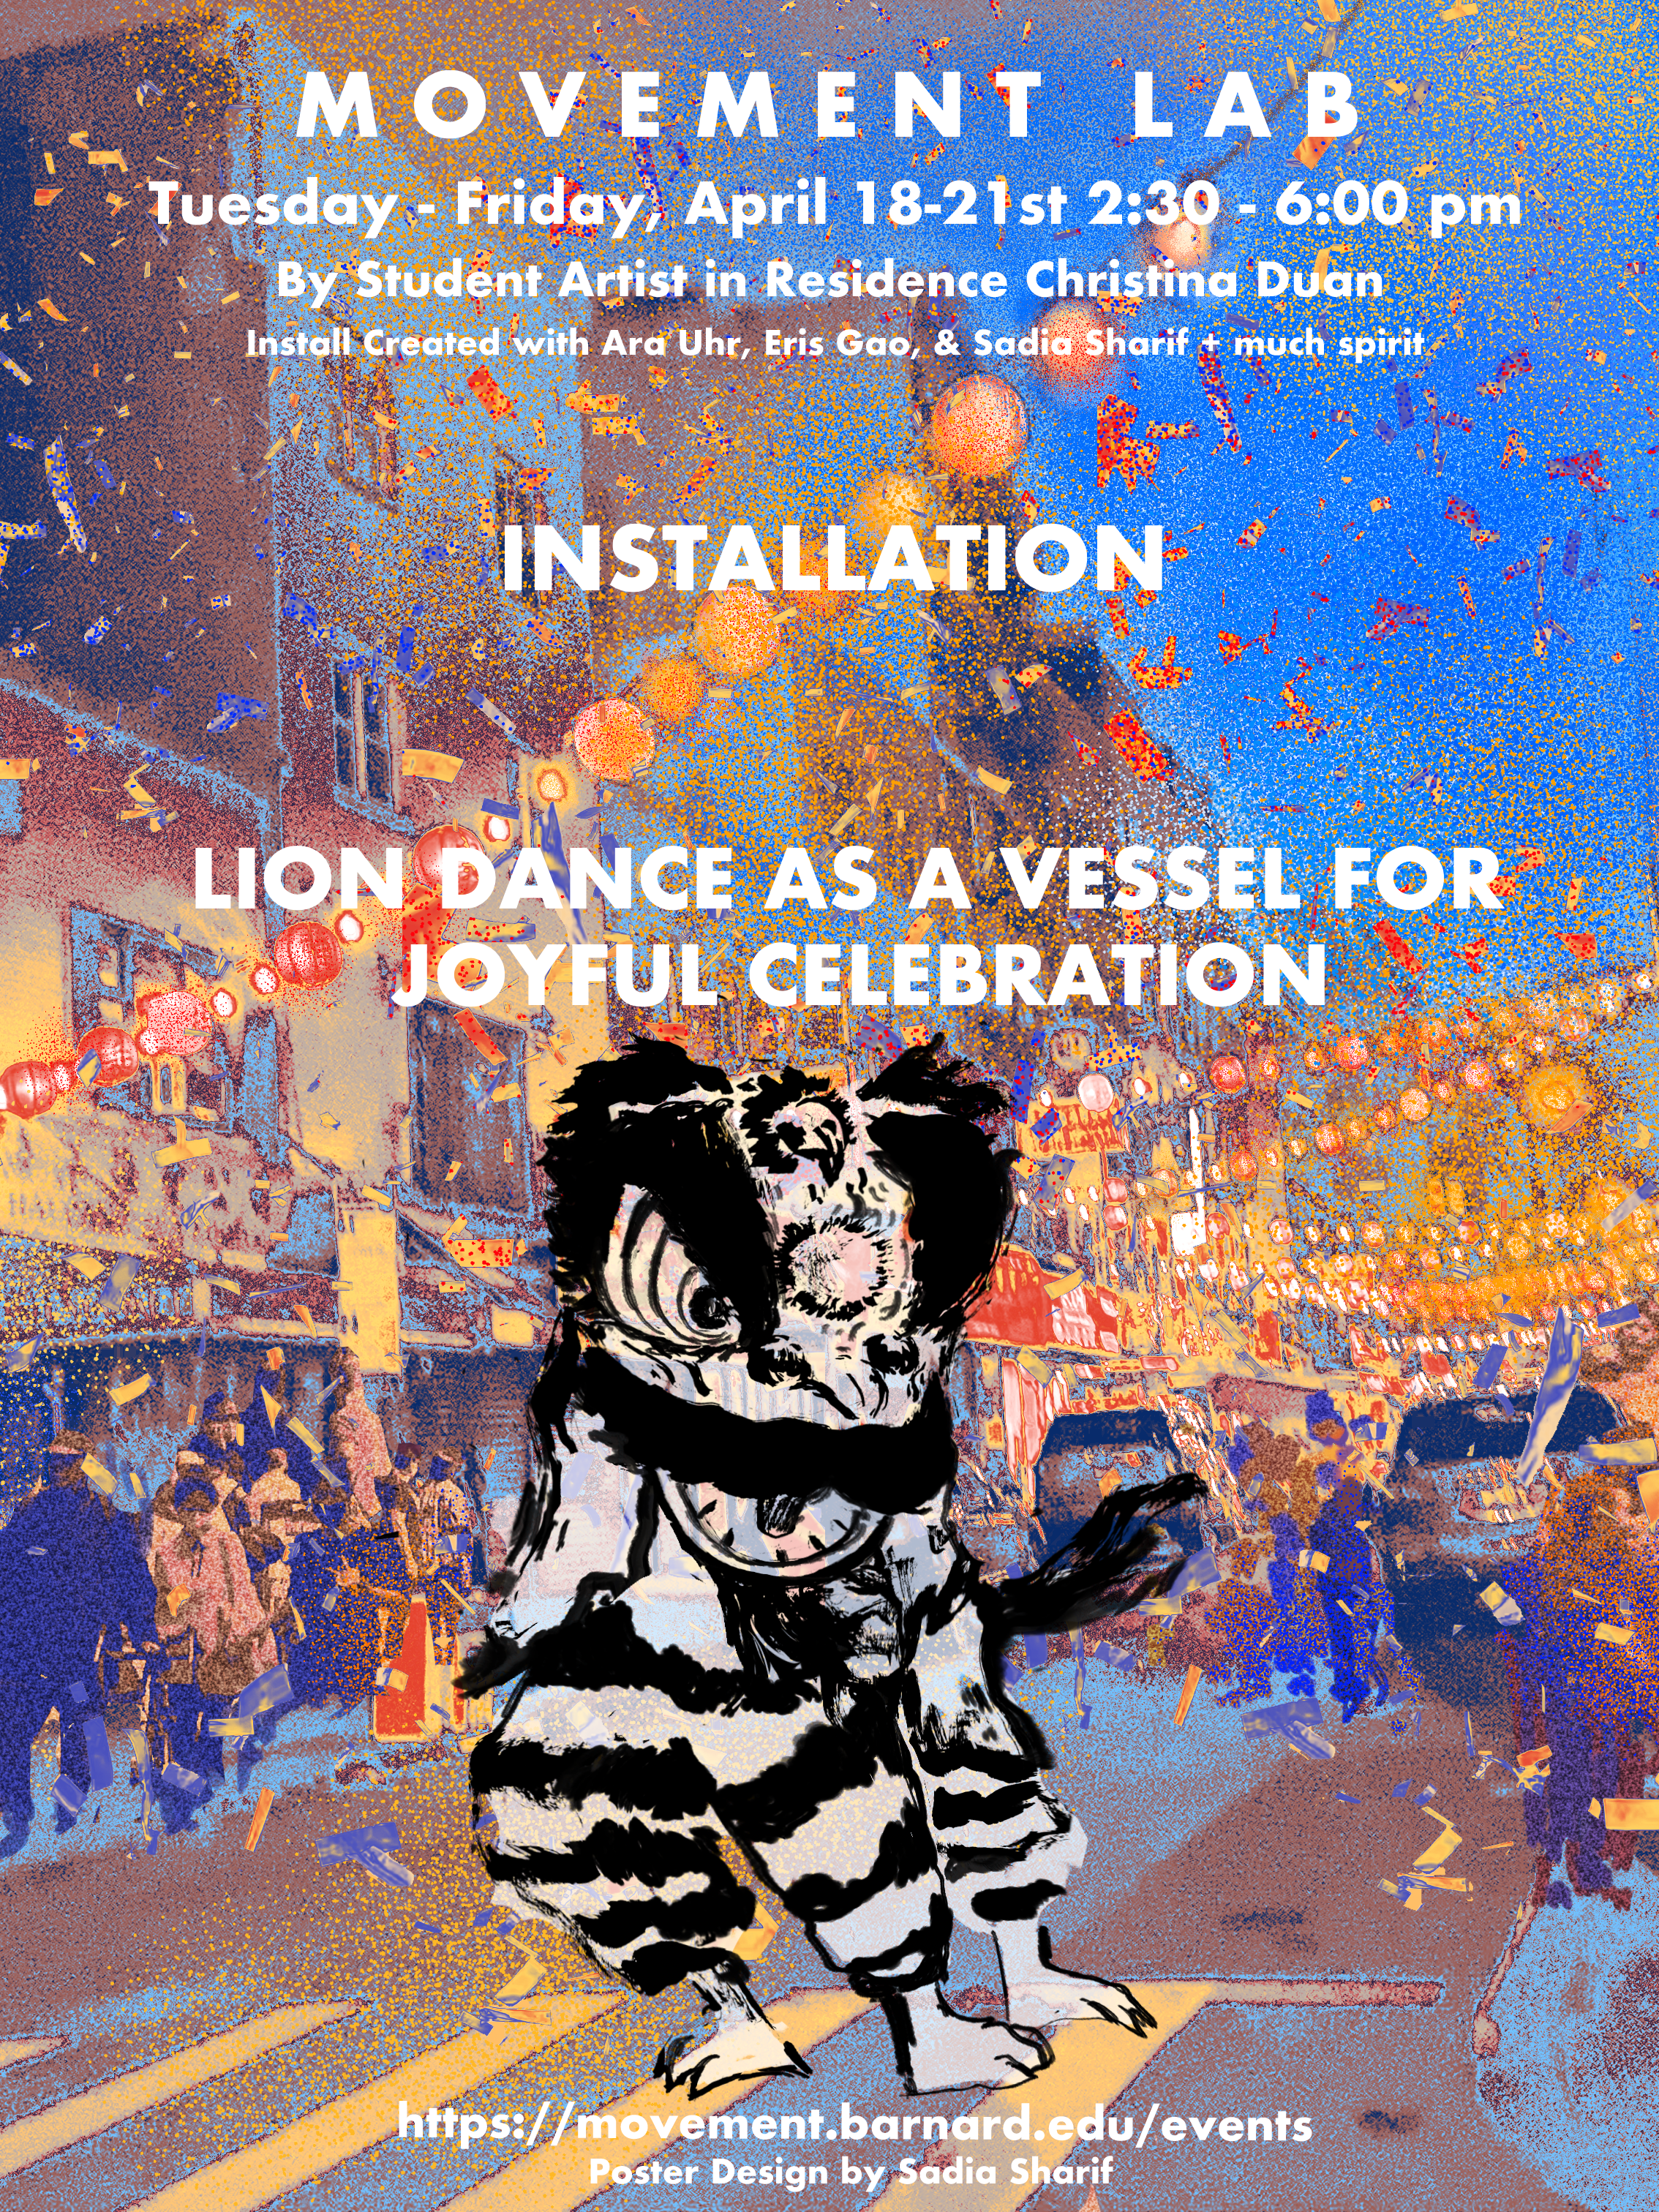 Installation: Lion Dance as a Vessel for Joyful Celebration by Student Artist in Residence Christina Duan